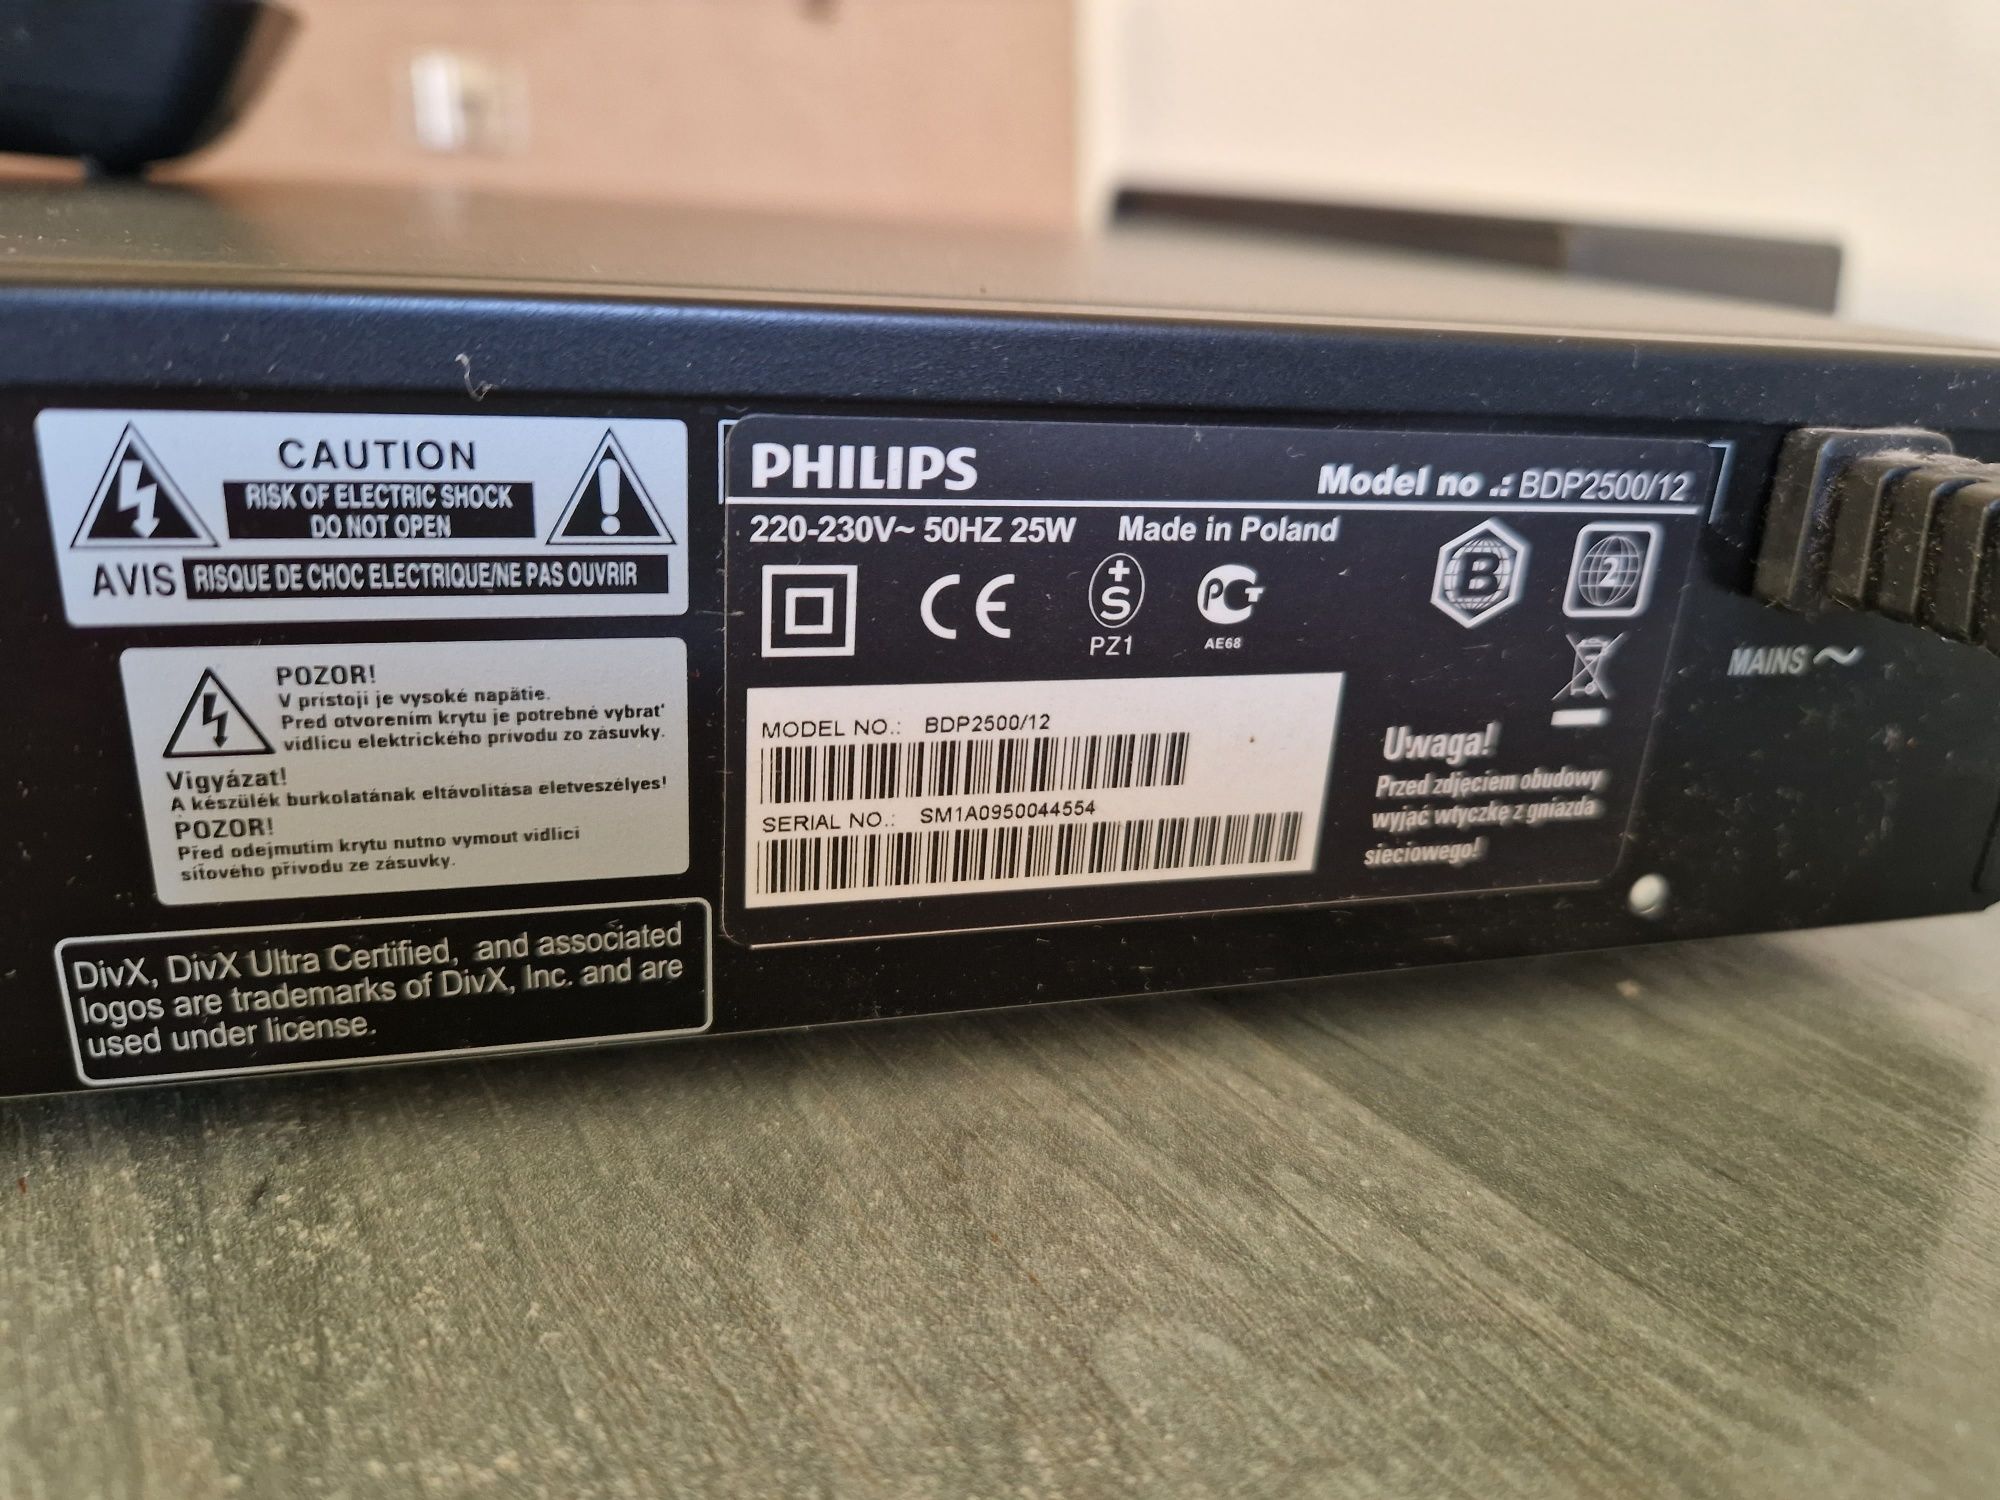 Blu-ray odtwarzacz philips model: BDP2500/12